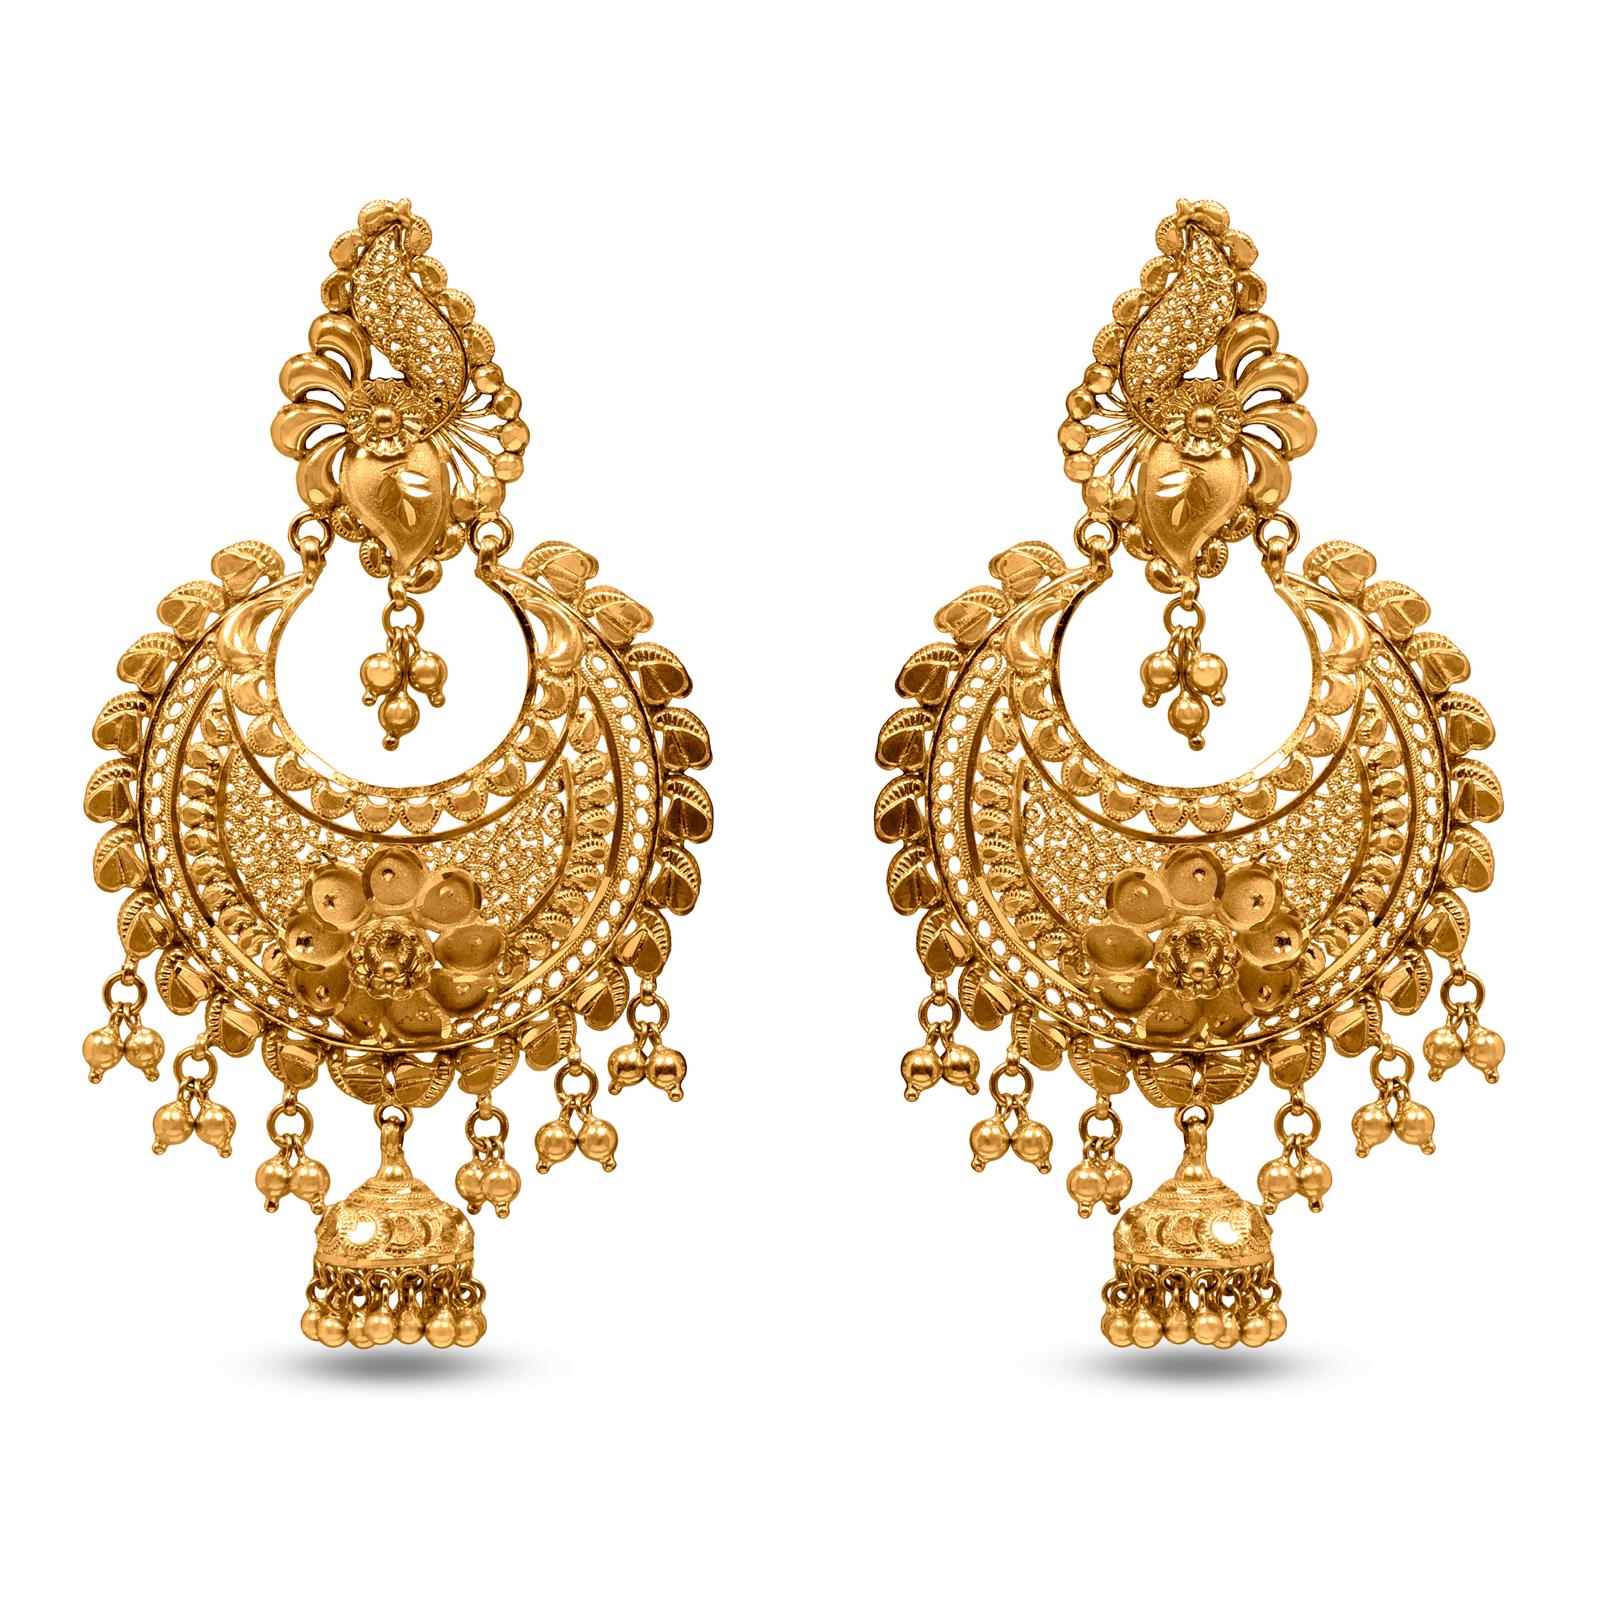 Aggregate 208+ 22k gold chandbali earrings super hot